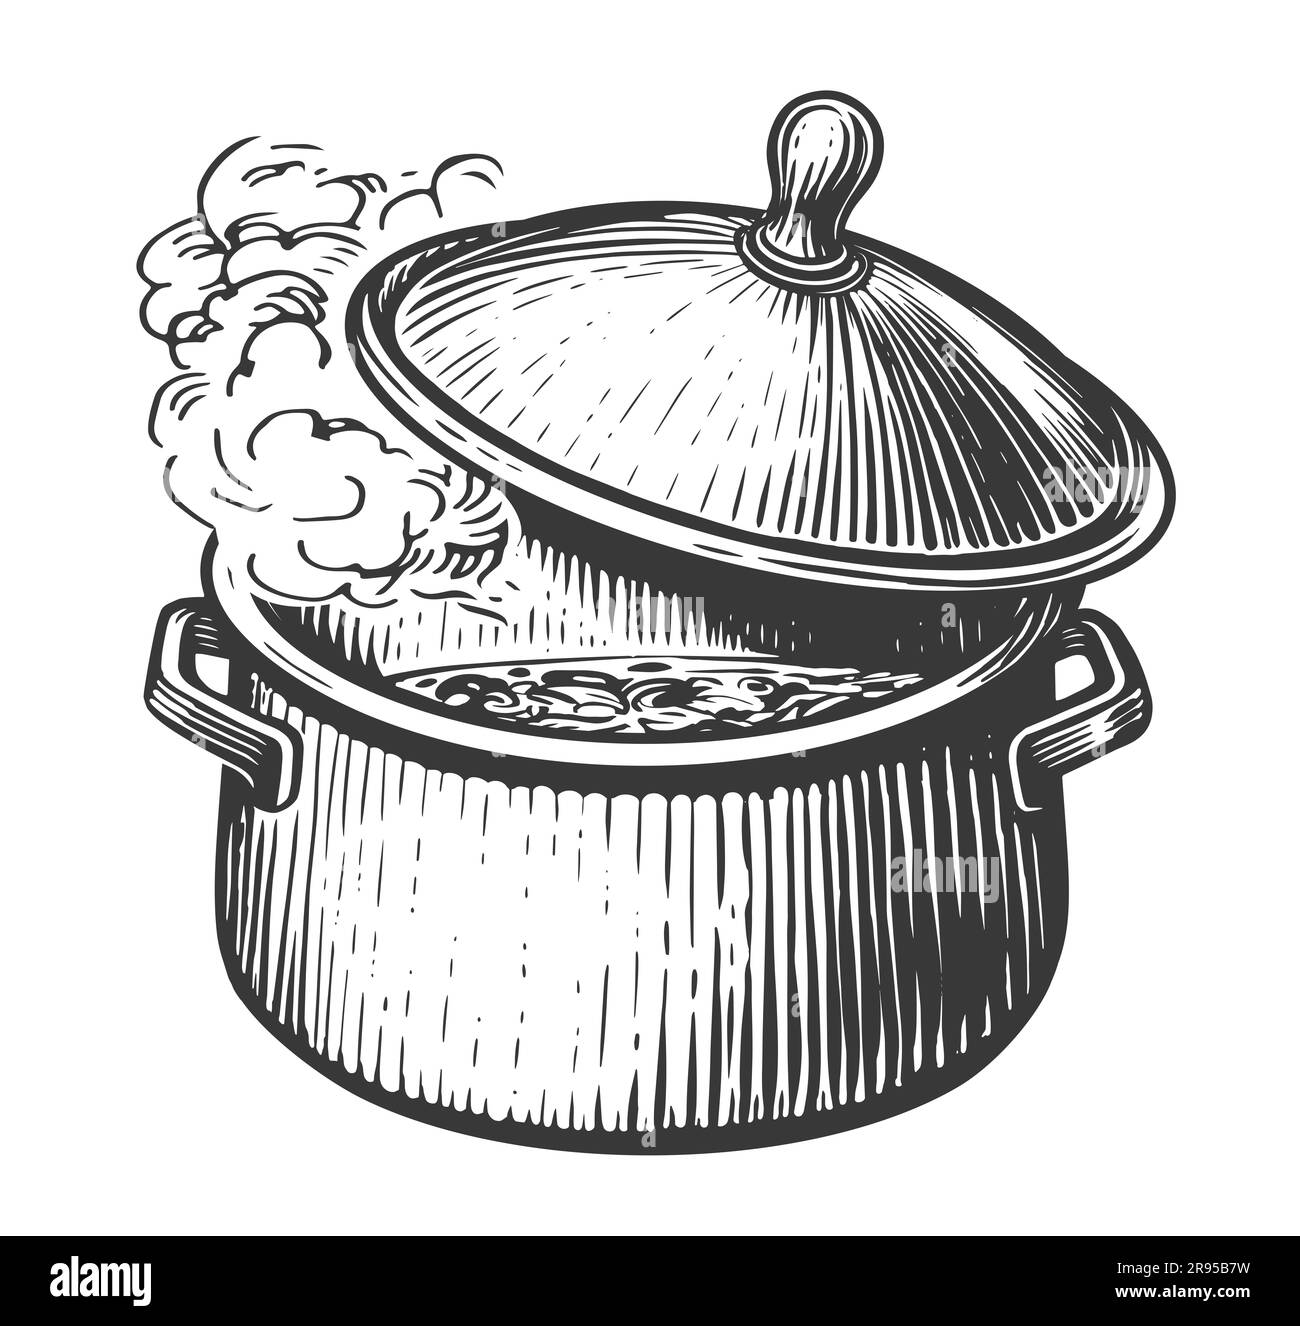 Soup pot is boiling. Cooking concept sketch. Illustration for cafe or restaurant menu Stock Photo